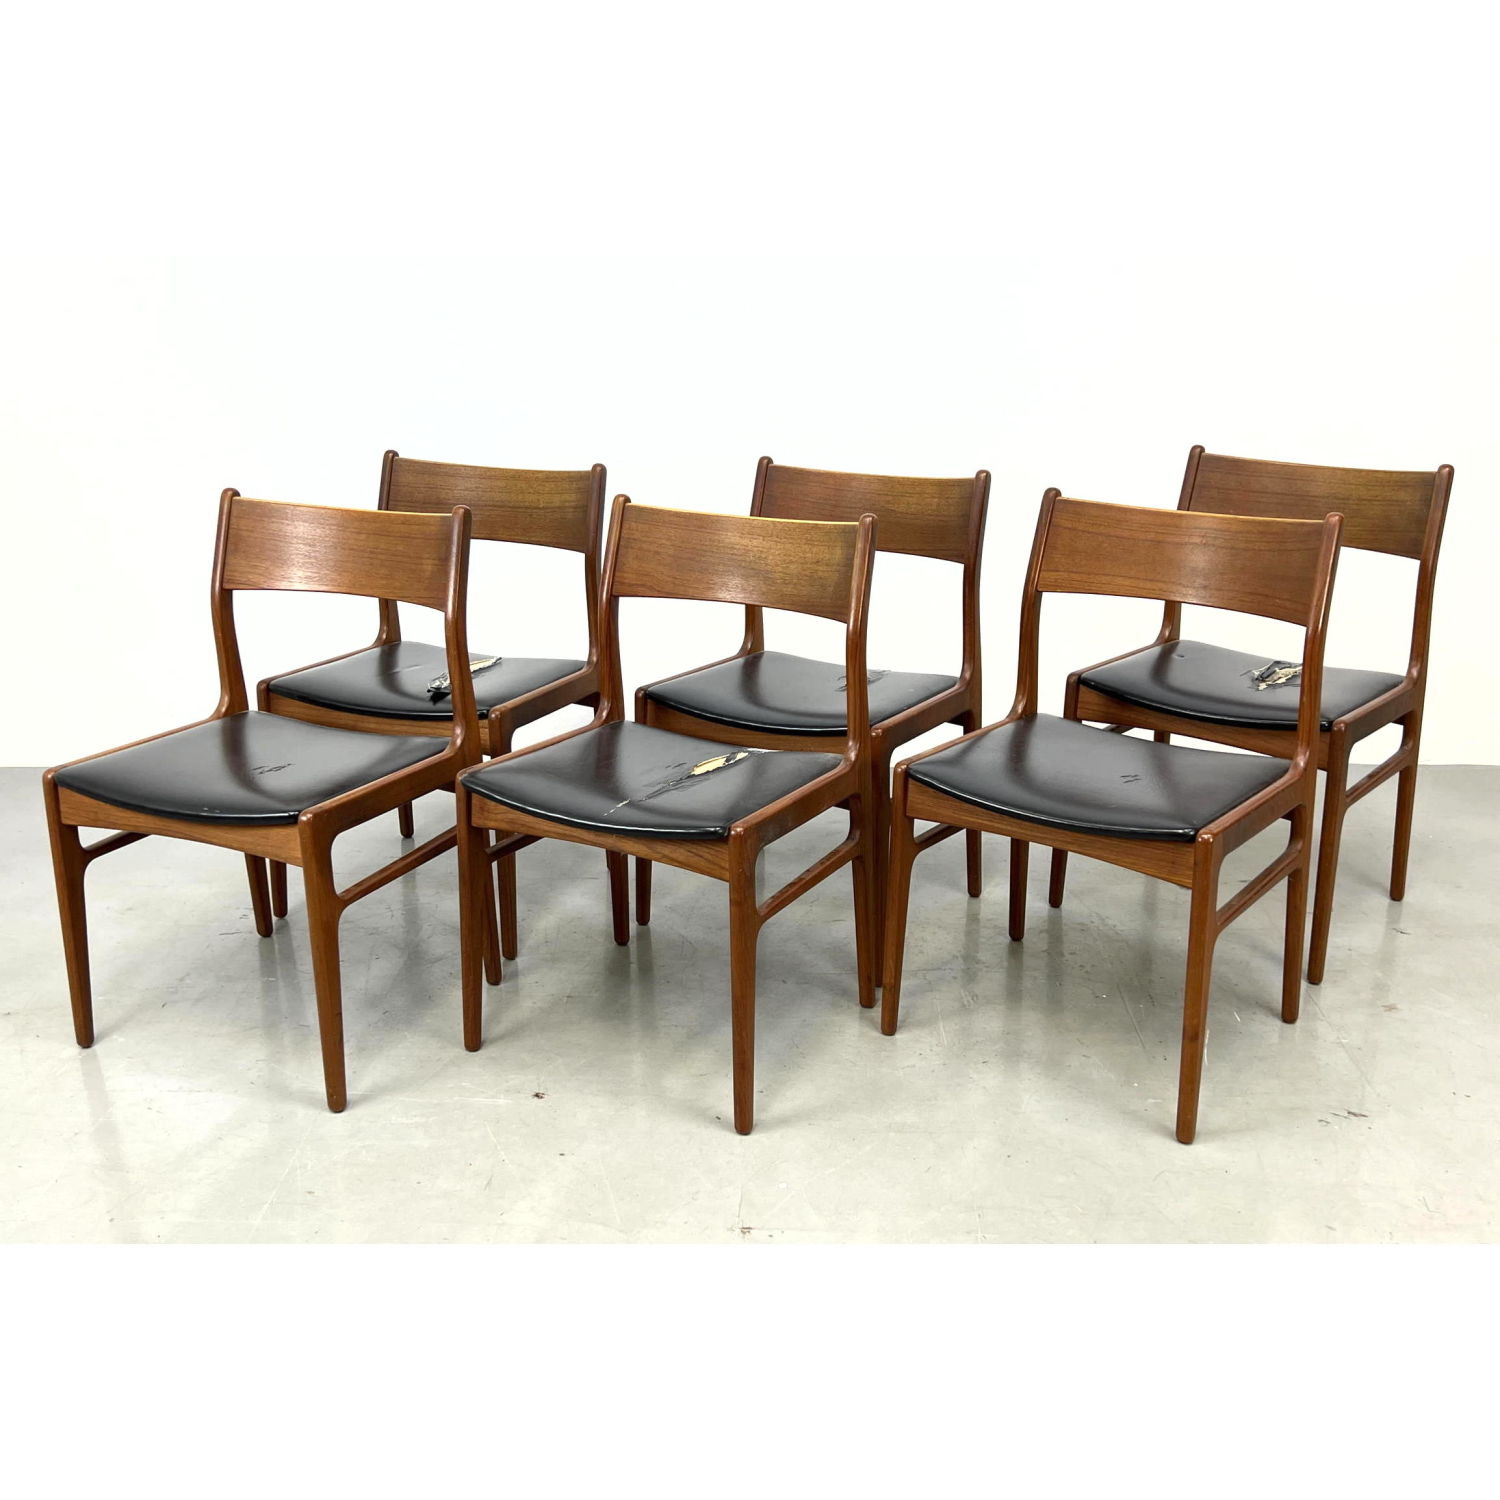 Set 6 Danish teak dining chairs  2b9022